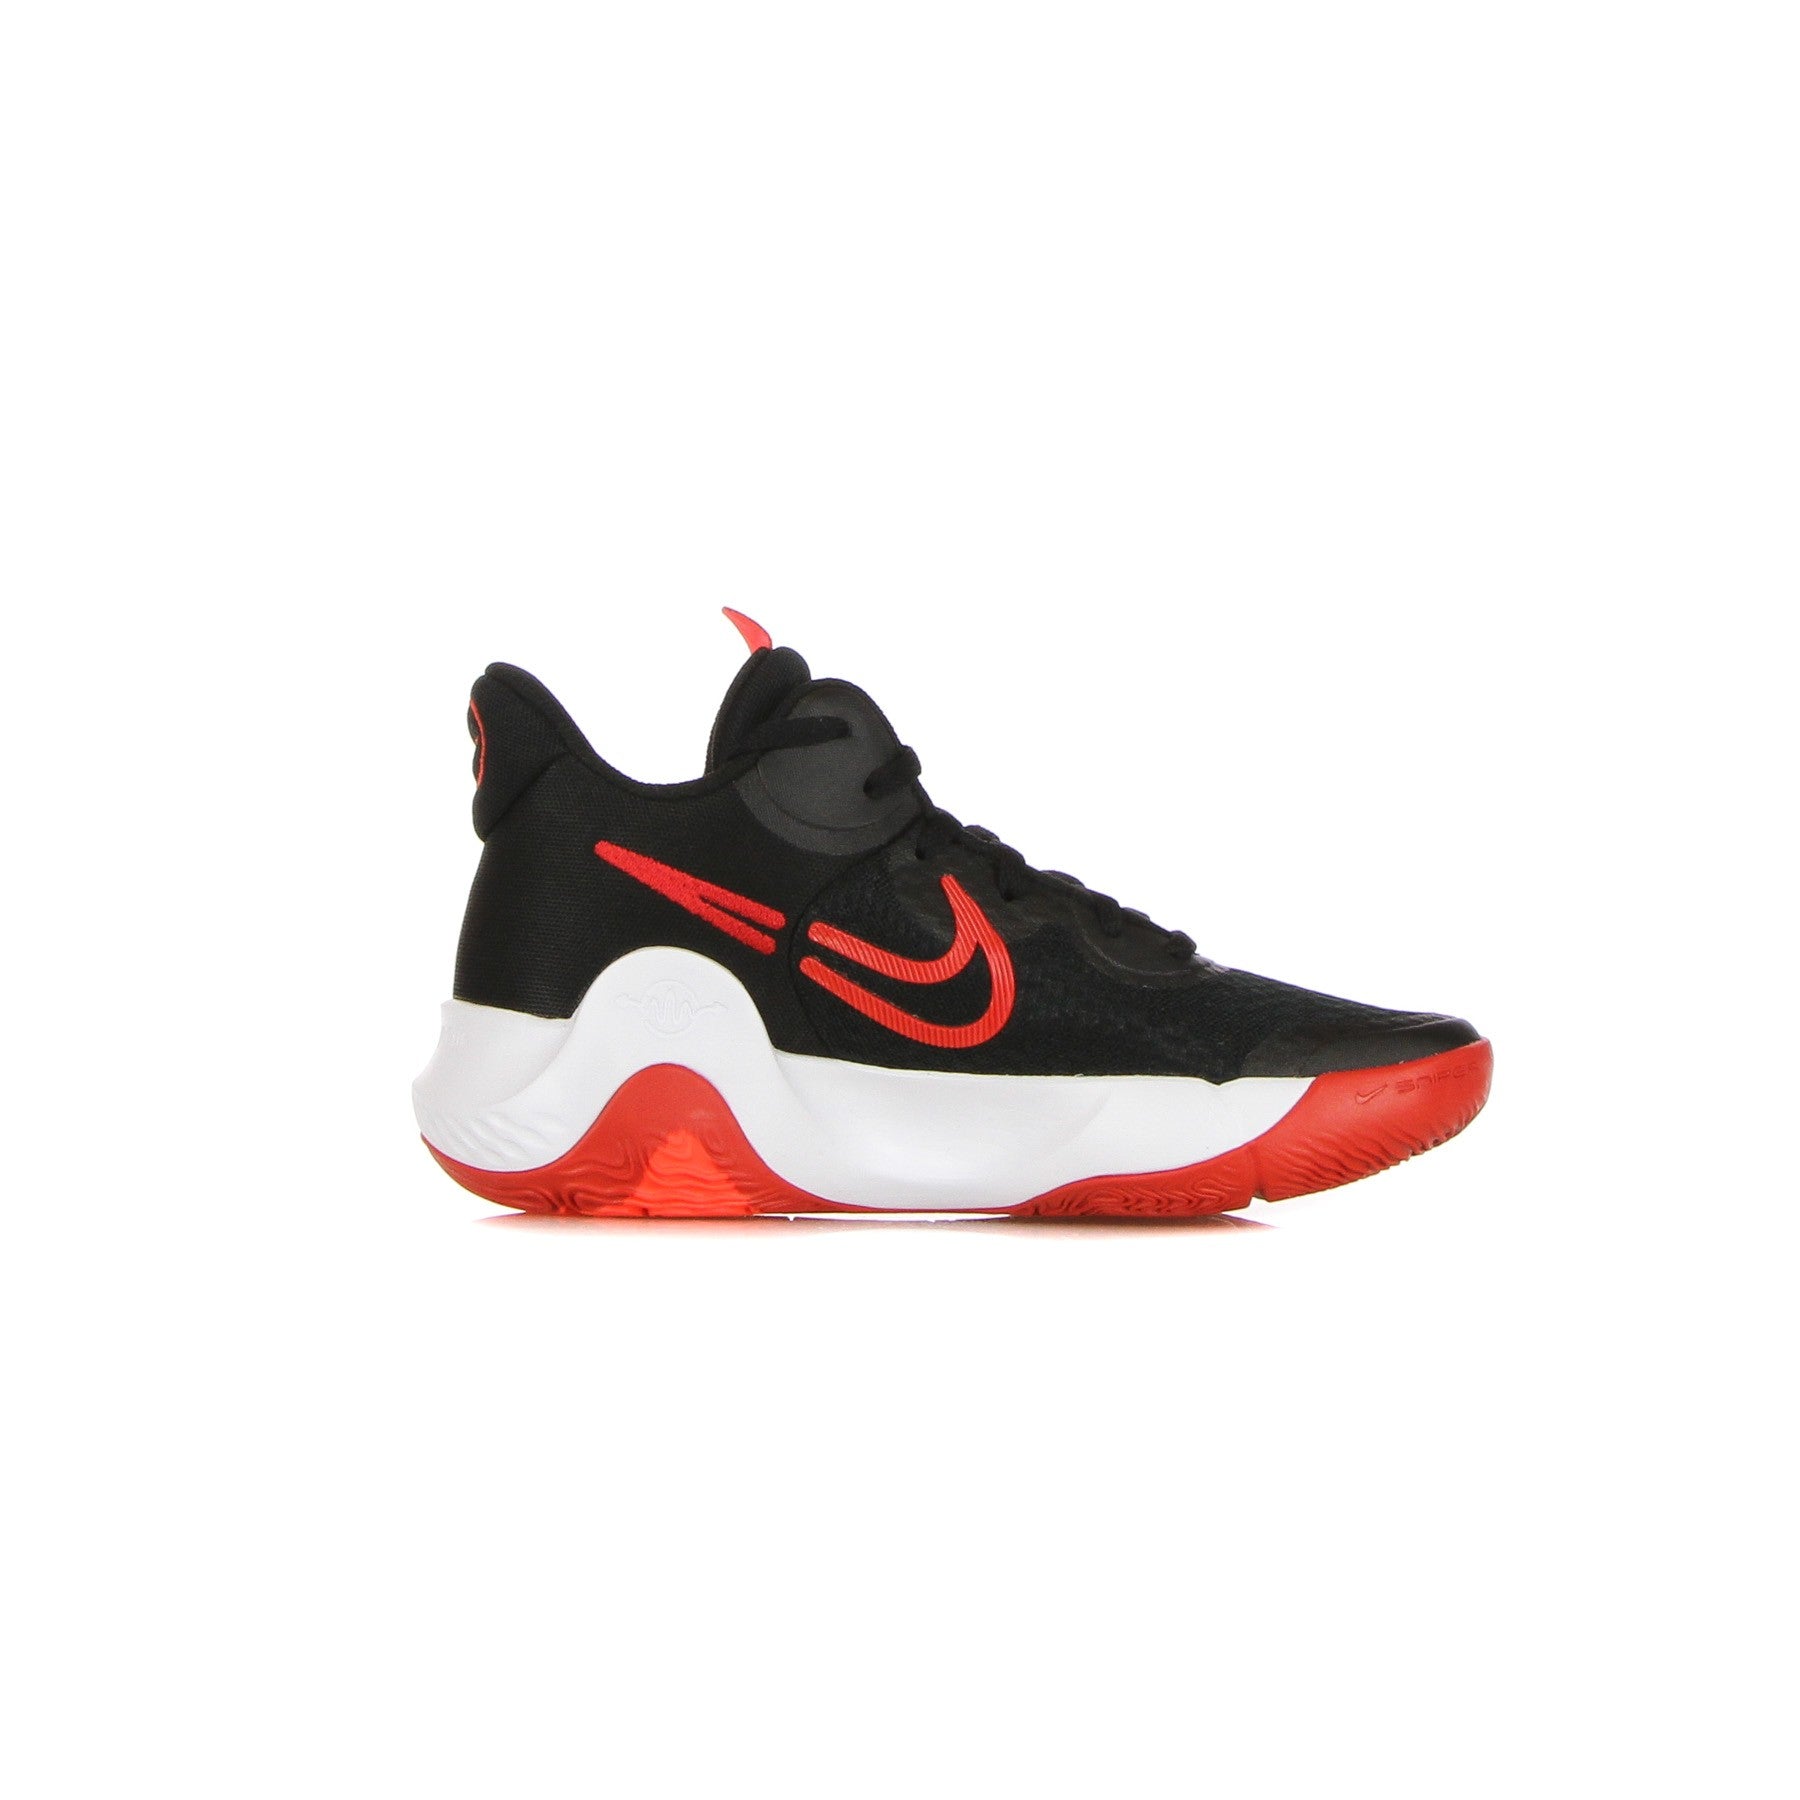 Kd Trey 5 Ix Men's Basketball Shoe Black/university Red/white